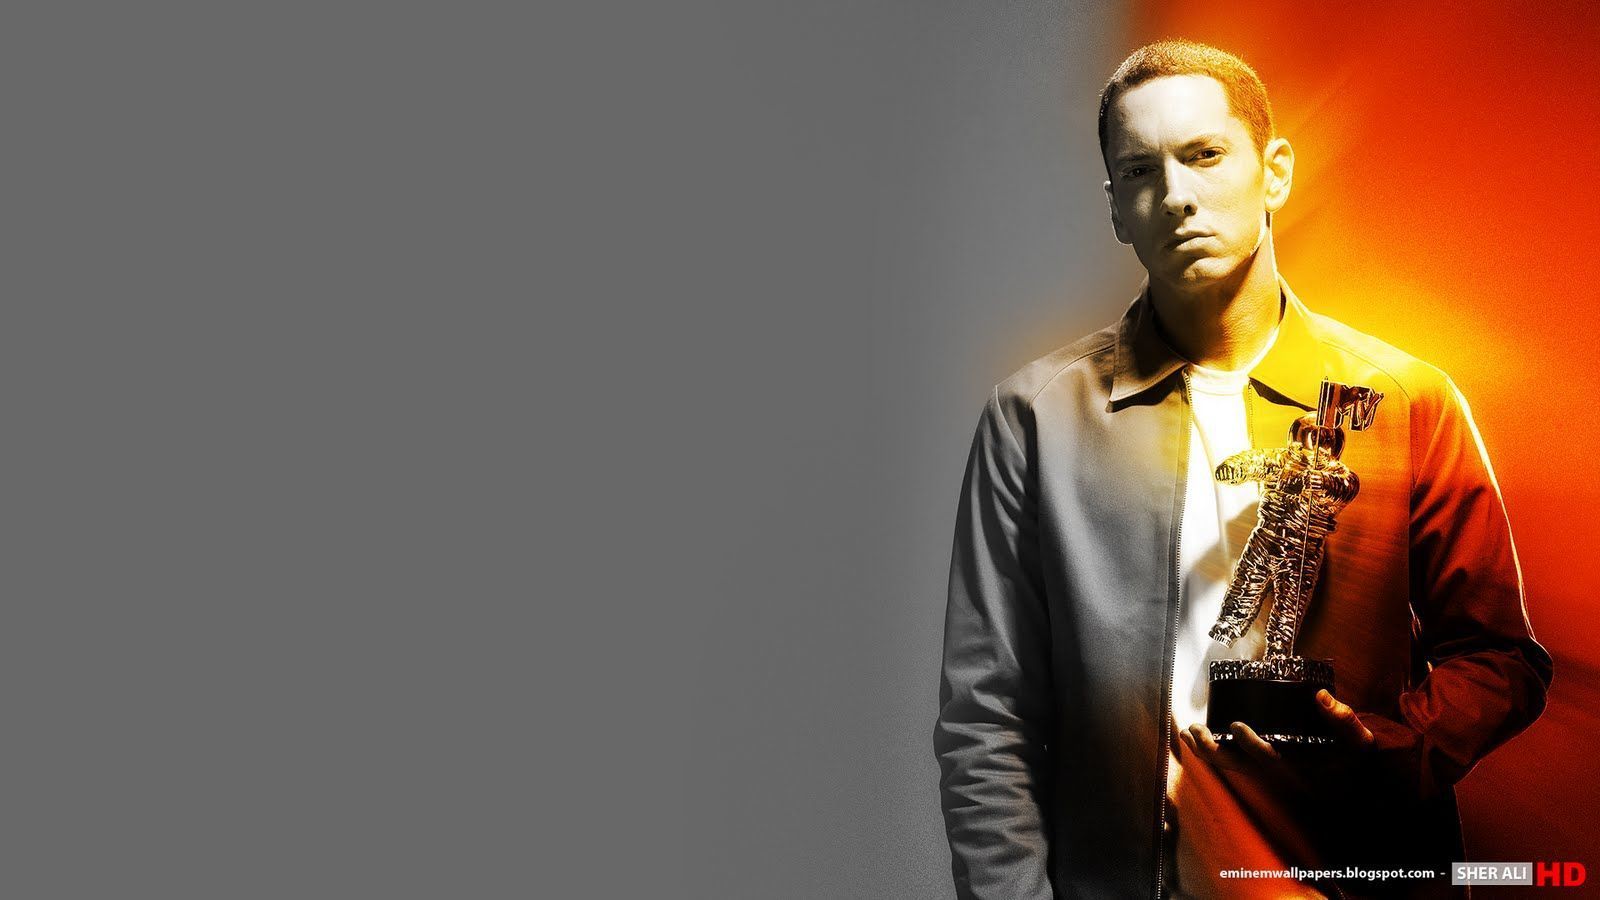 General 1600x900 Eminem MTV simple background looking at viewer Rapper singer